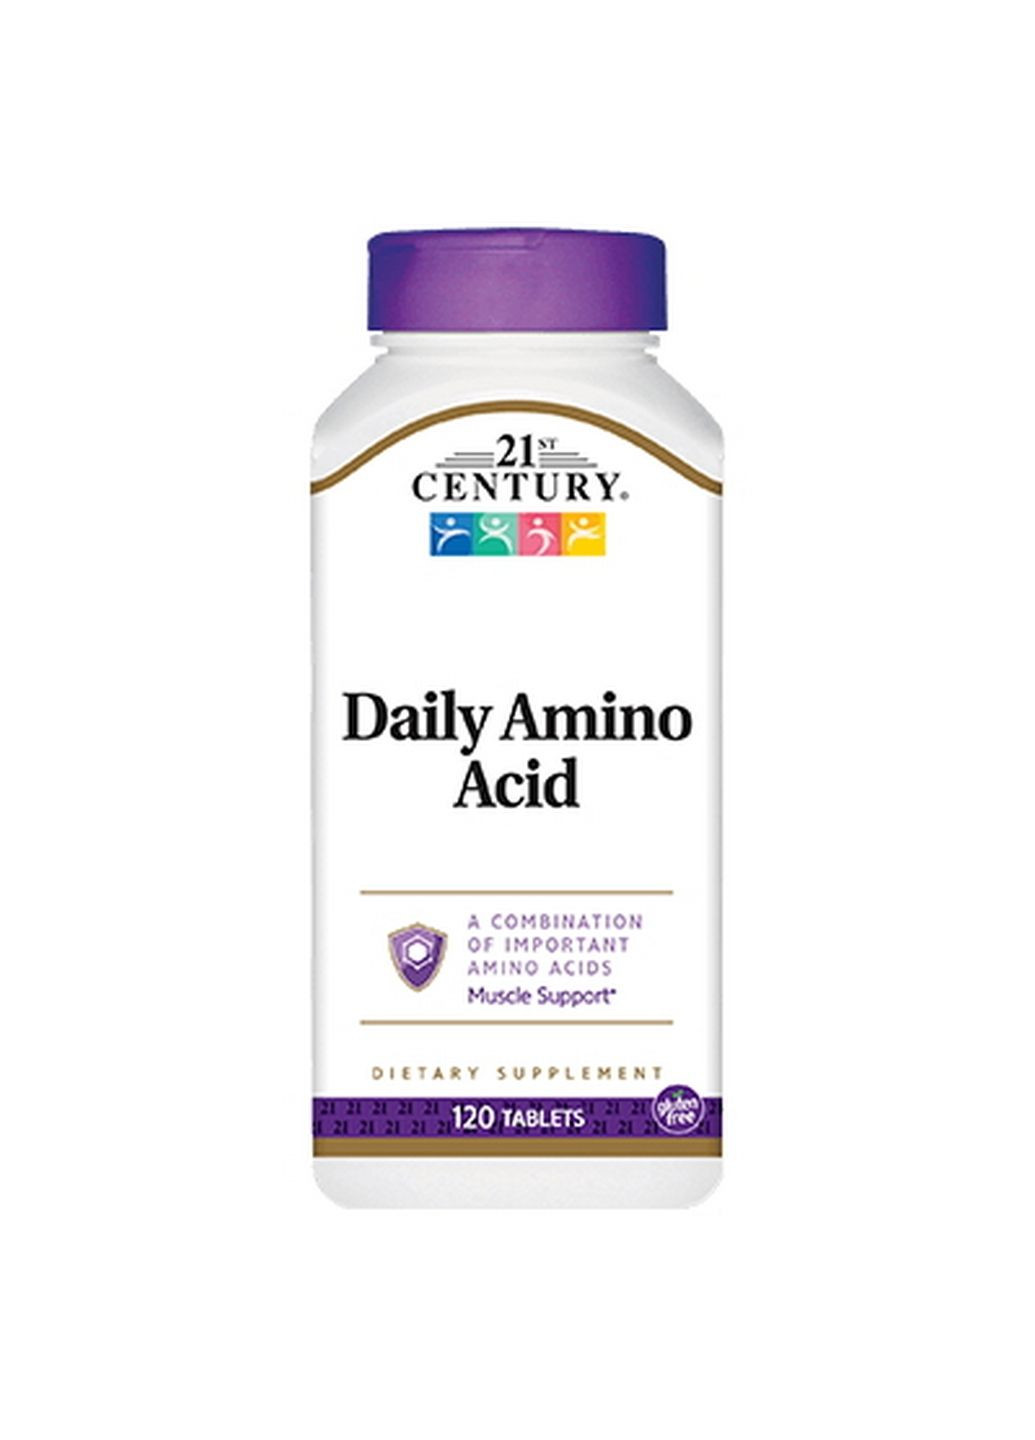 Аминокислота Daily Amino Acid, 120 таблеток 21st Century (293418978)